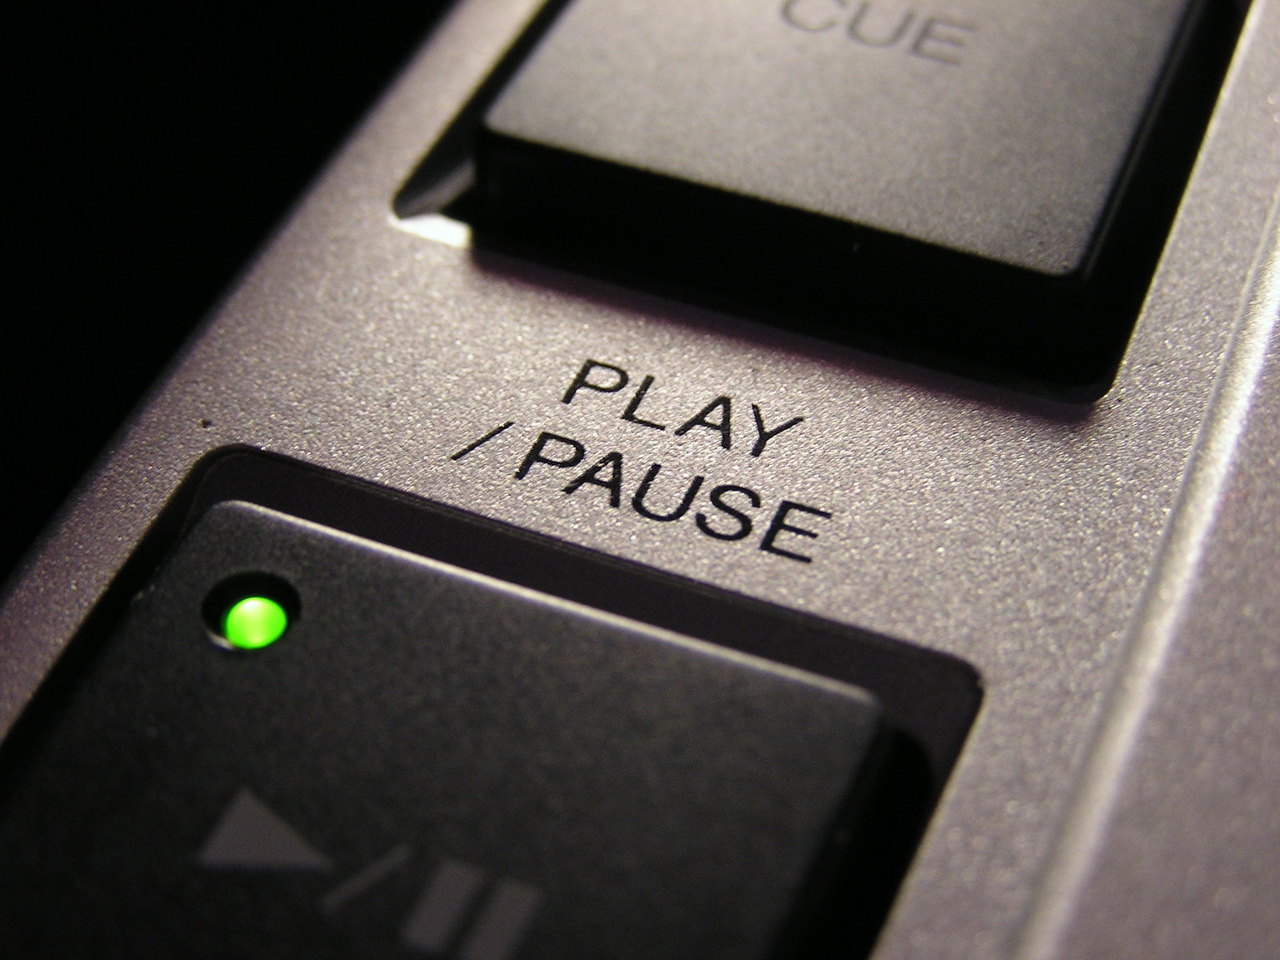 Play/Pause green light indicator